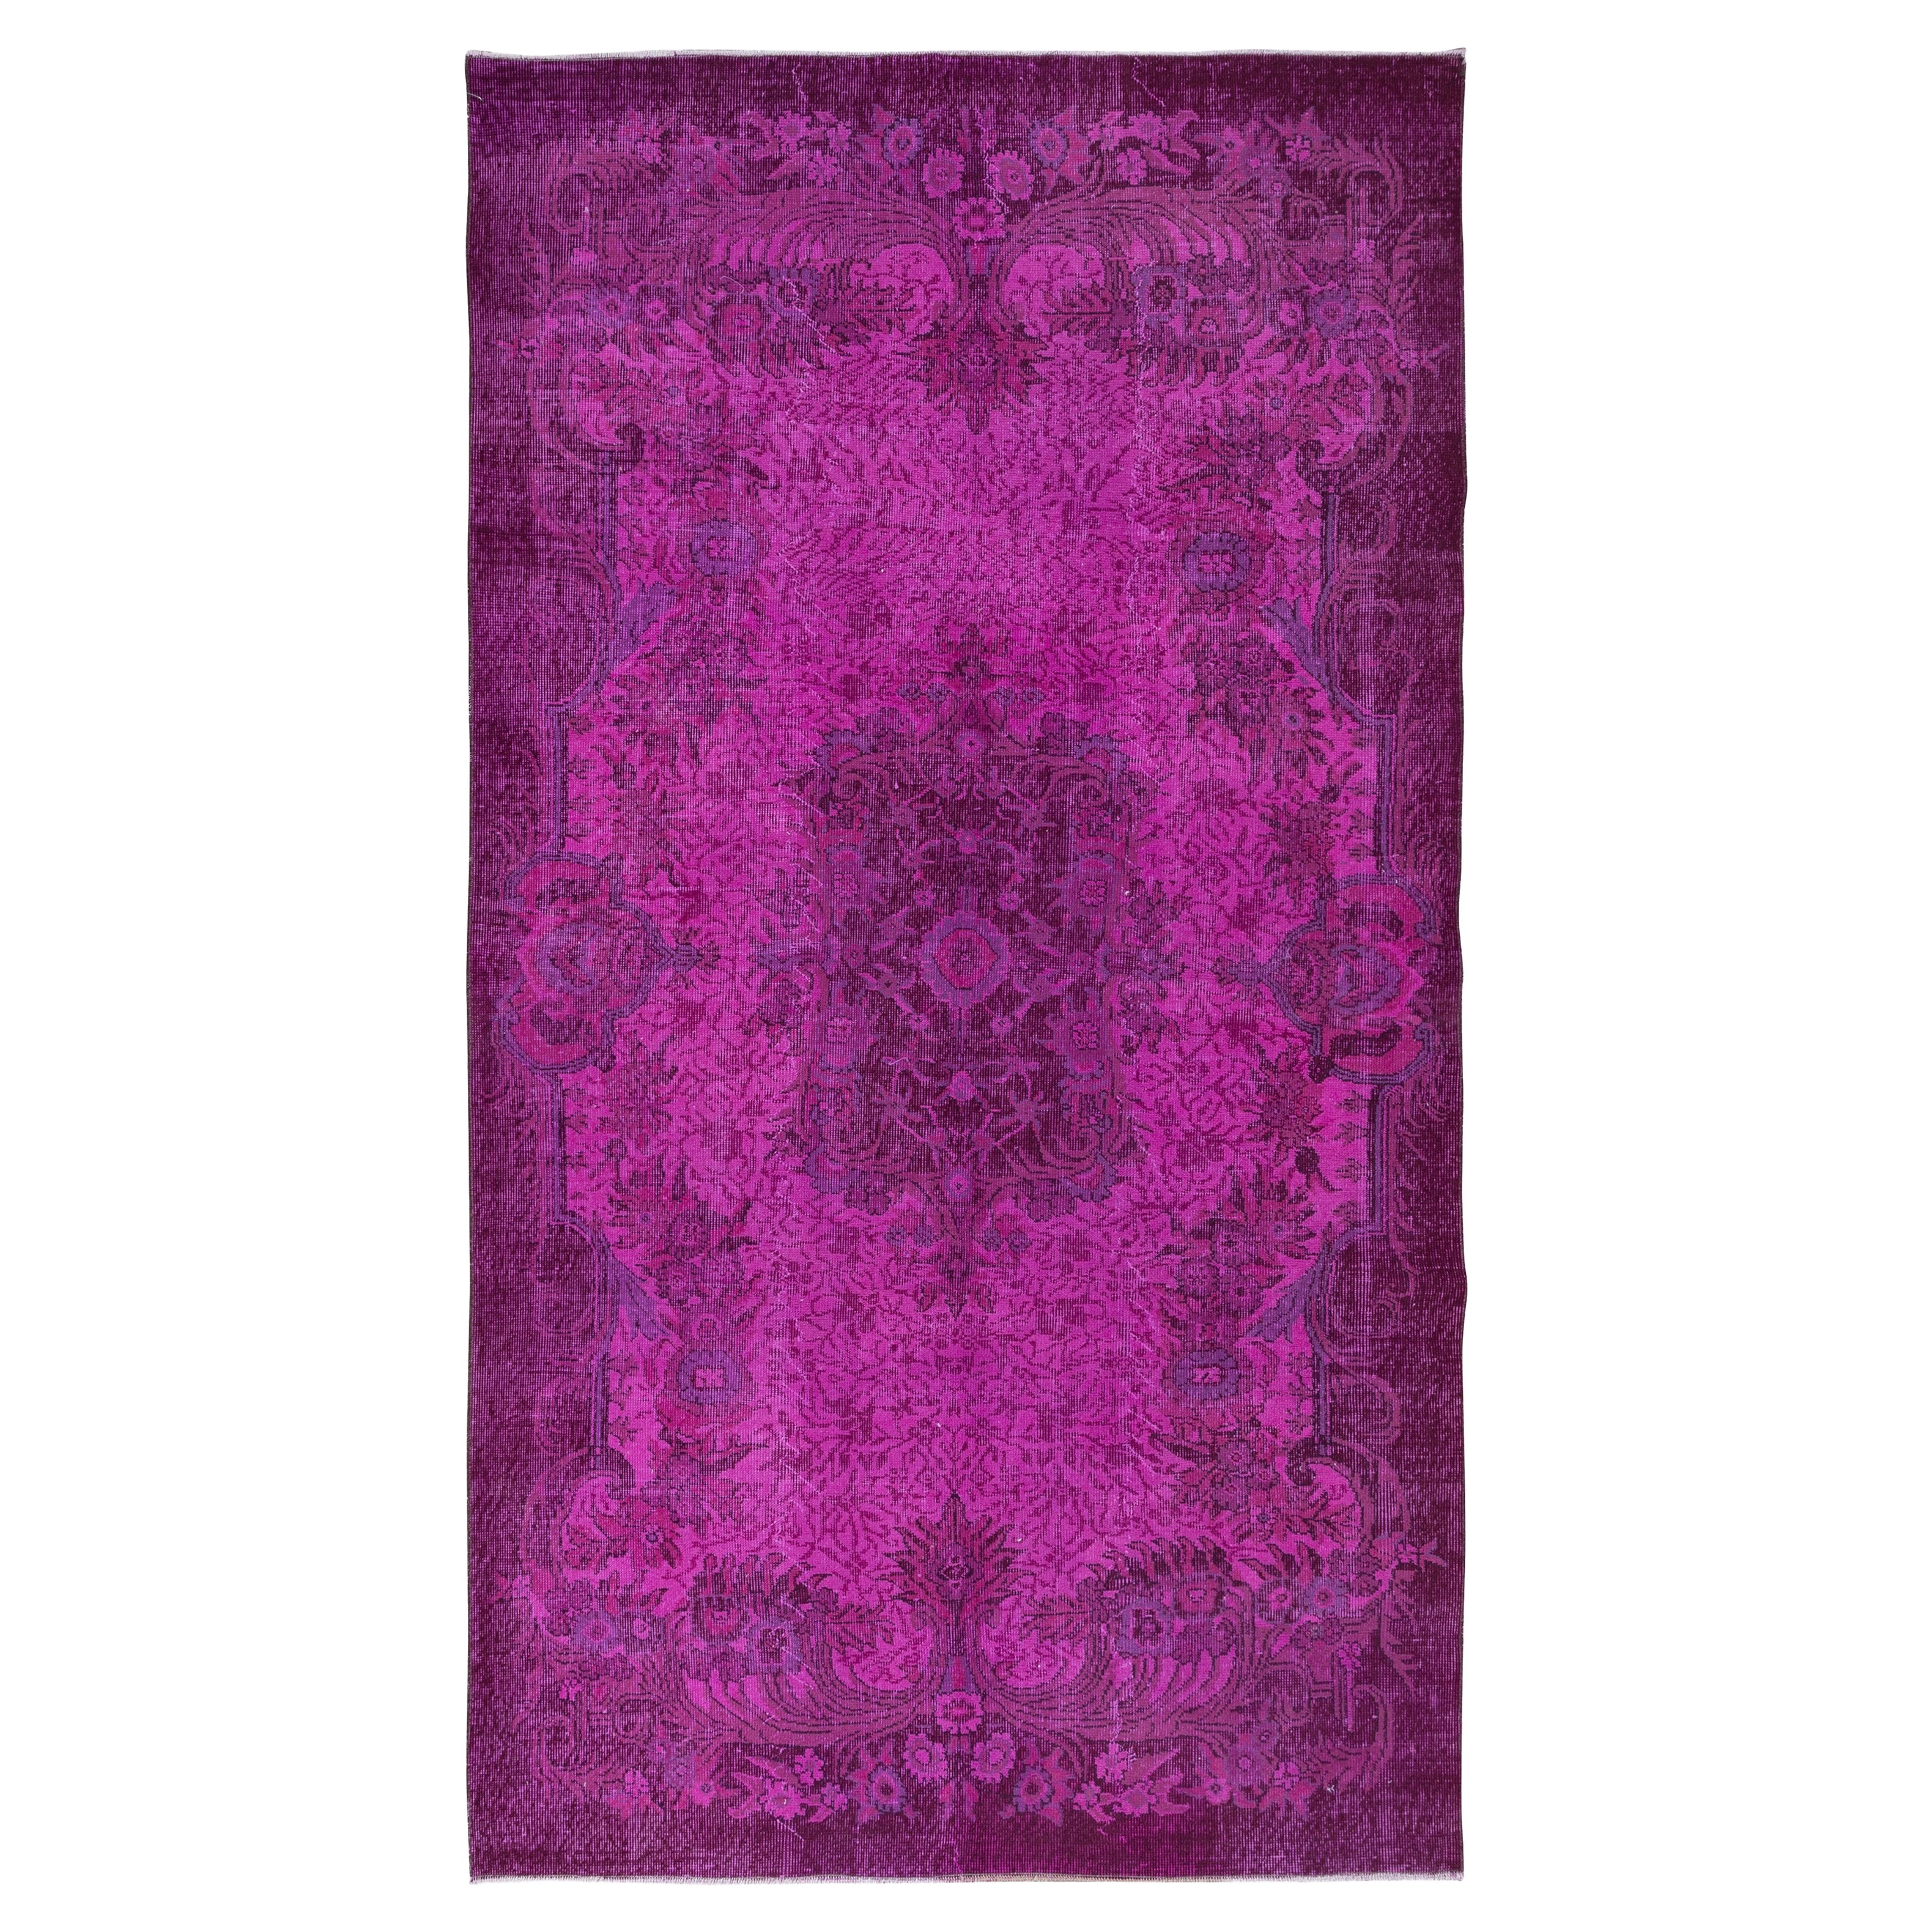 5.4x9.7 Ft Splendide tapis de zone rose fait à la main, Modernity Living Room Carpet (tapis de salon turc moderne)